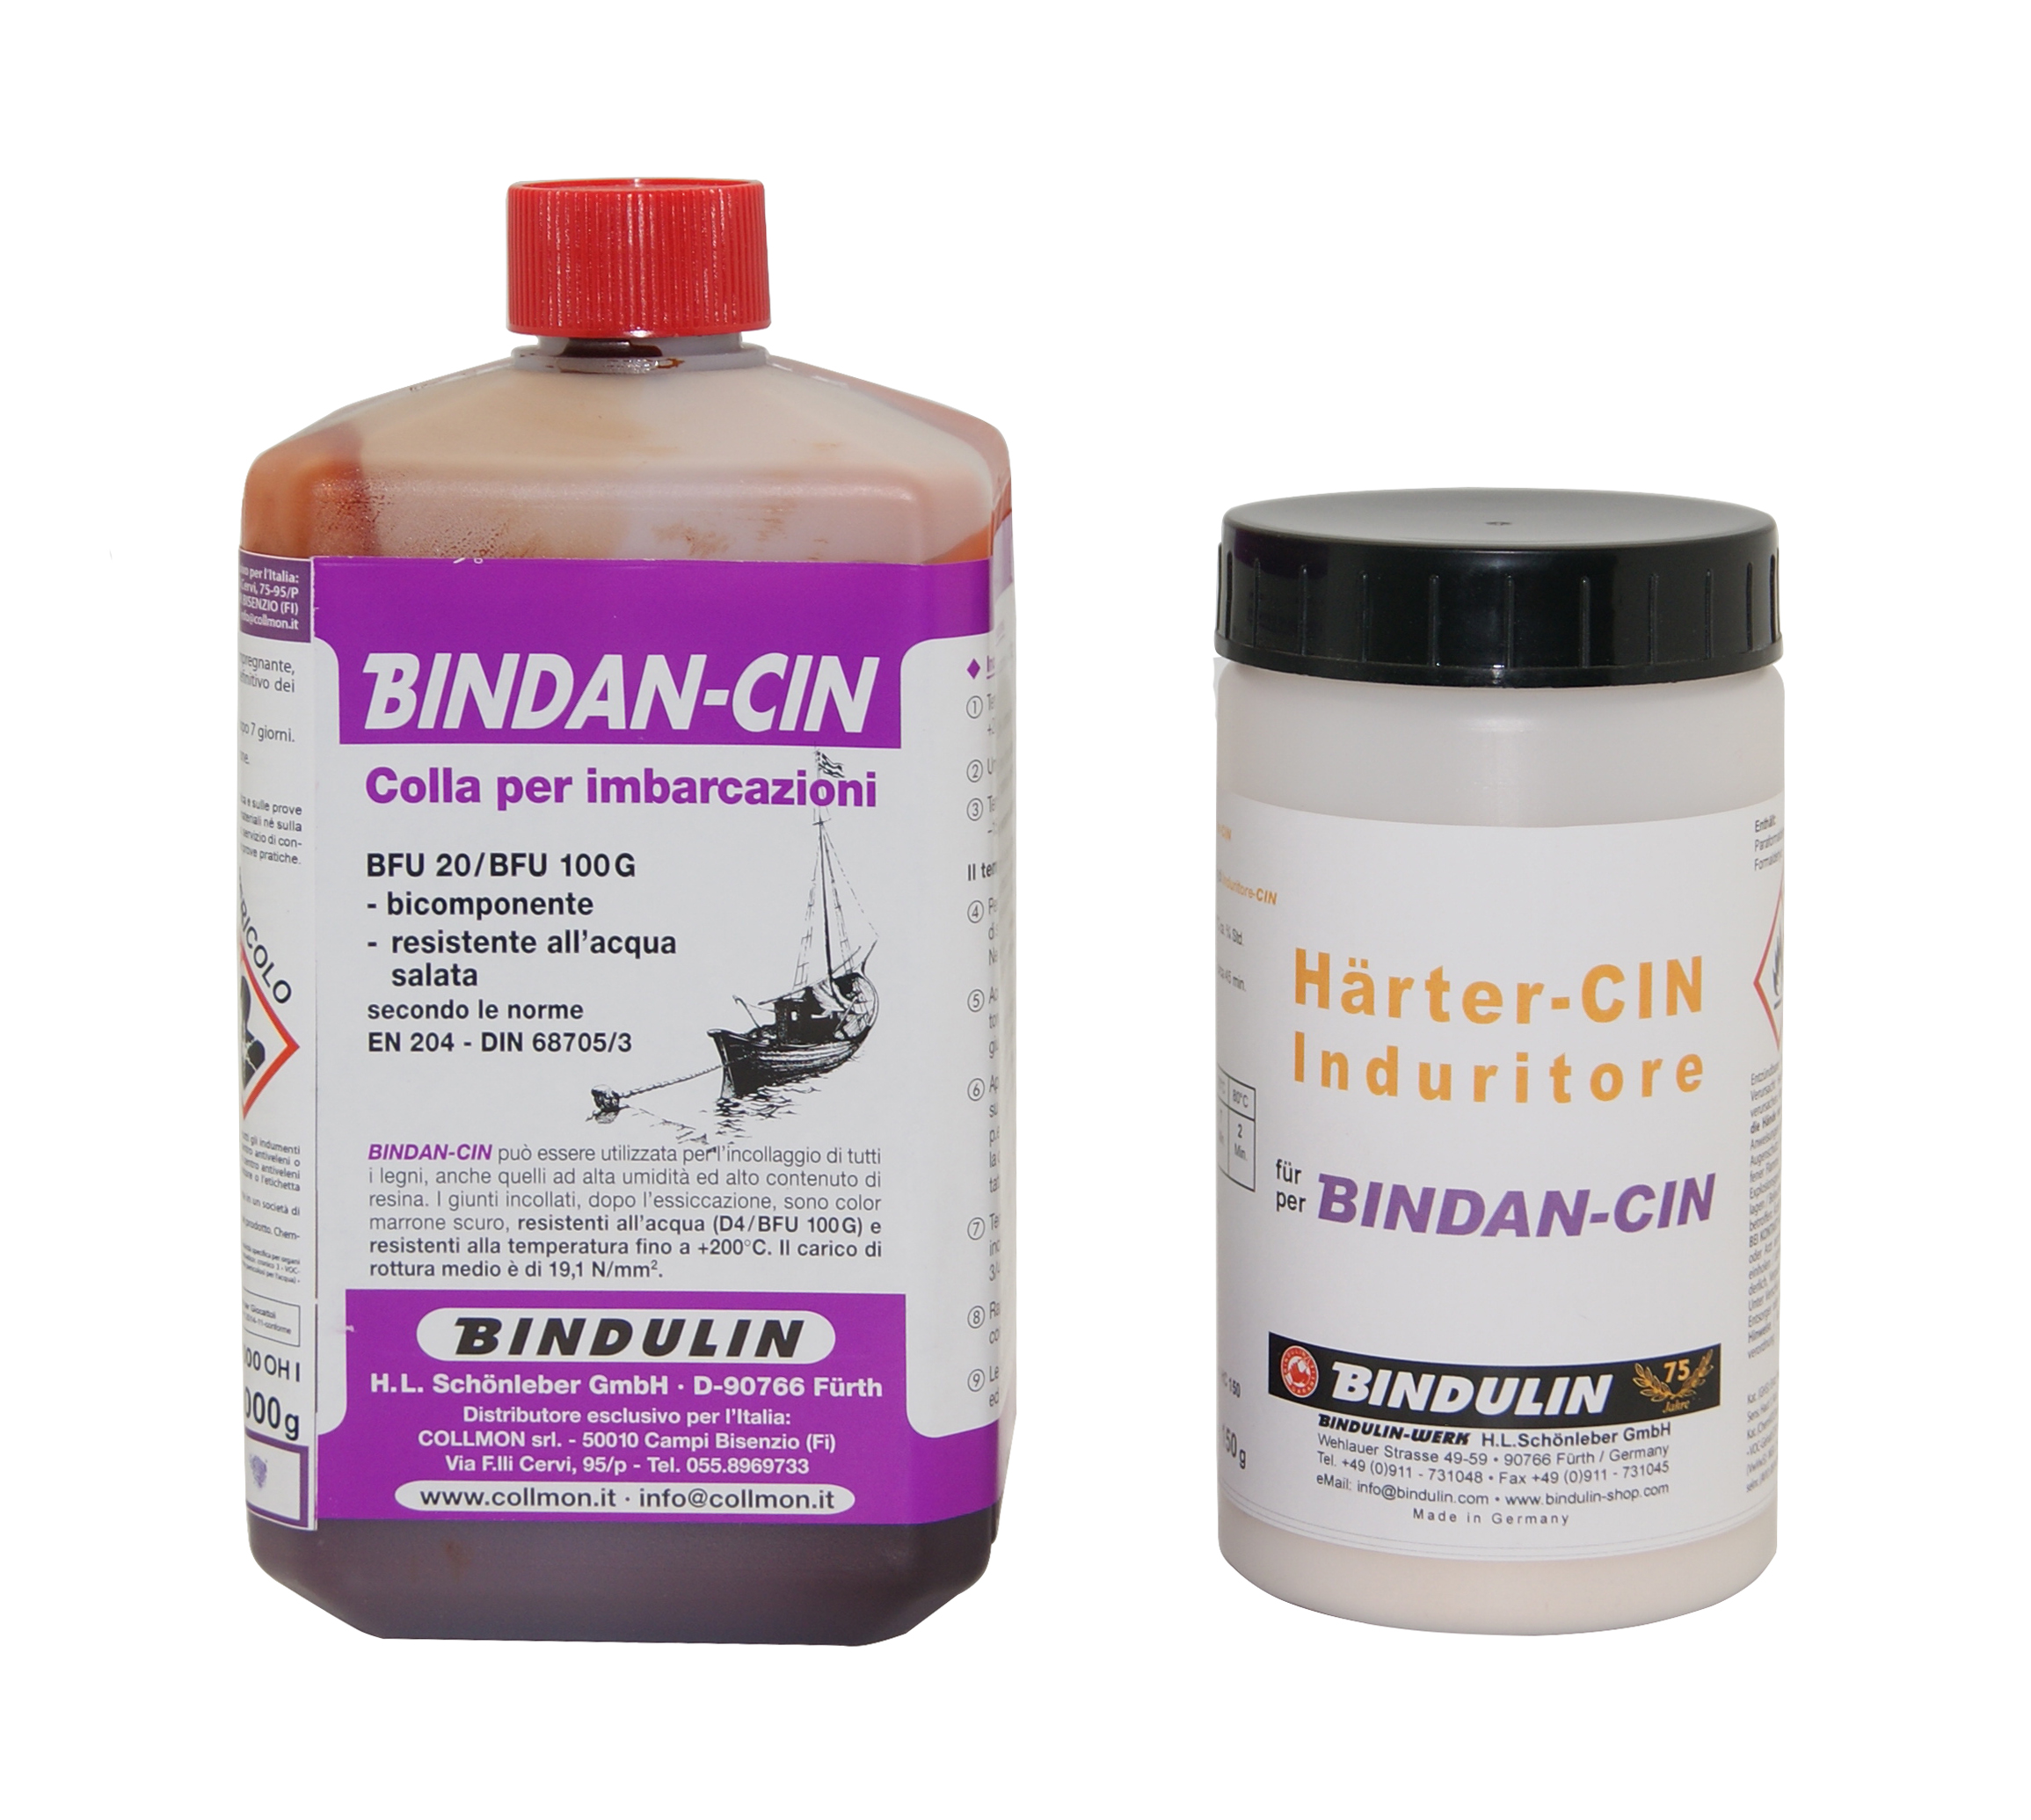 Bindulin - bindan-cin bicomp d4 marrone 1 kg+150 g